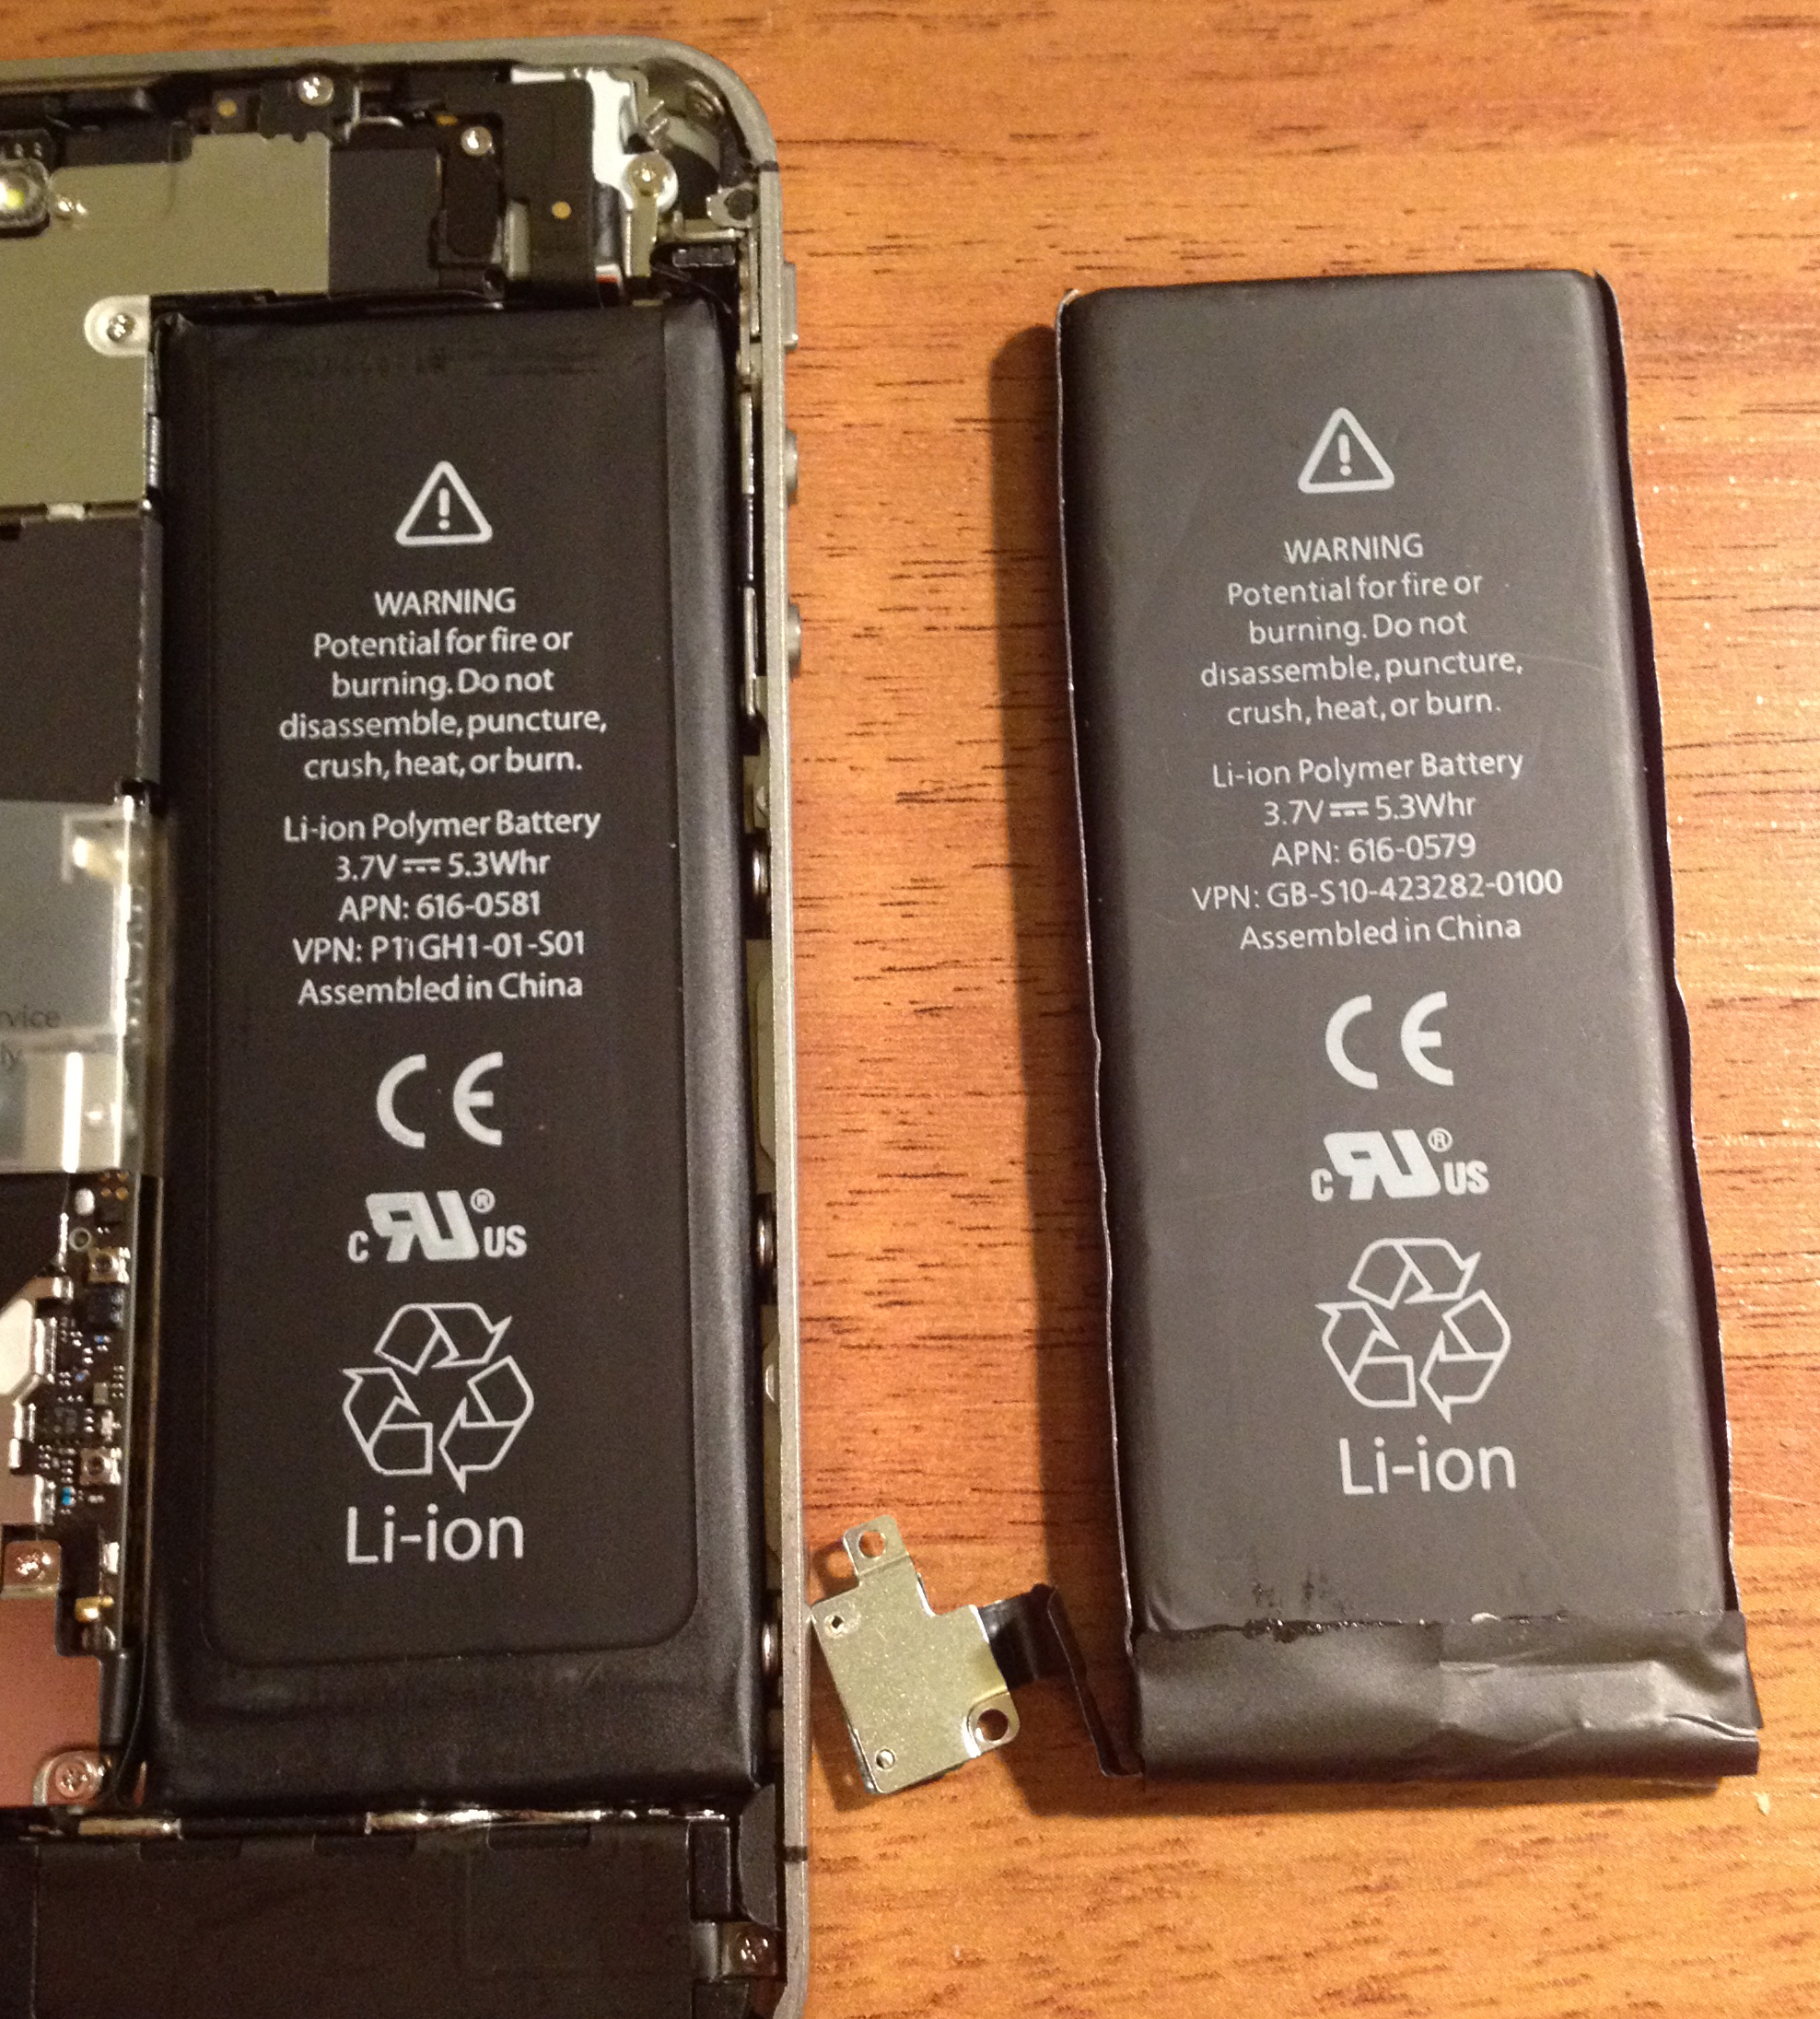 Uganda Medalje sporadisk iPhone 4s wont boot after battery replace… - Apple Community